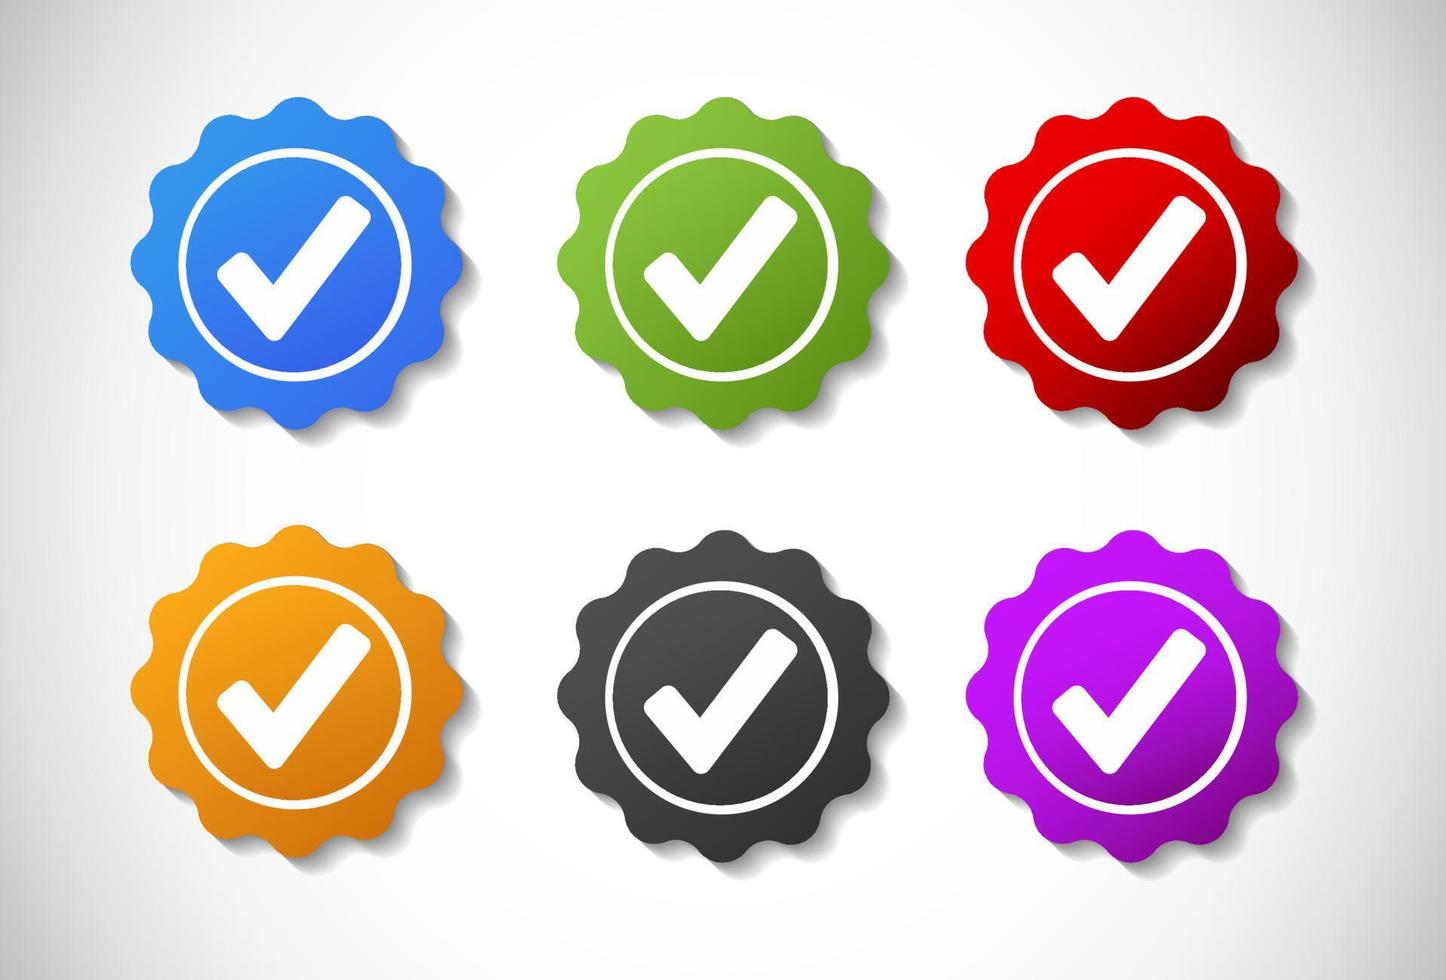 raccolta di segni di spunta o badge approvati in una varietà di scelte di colore vettore